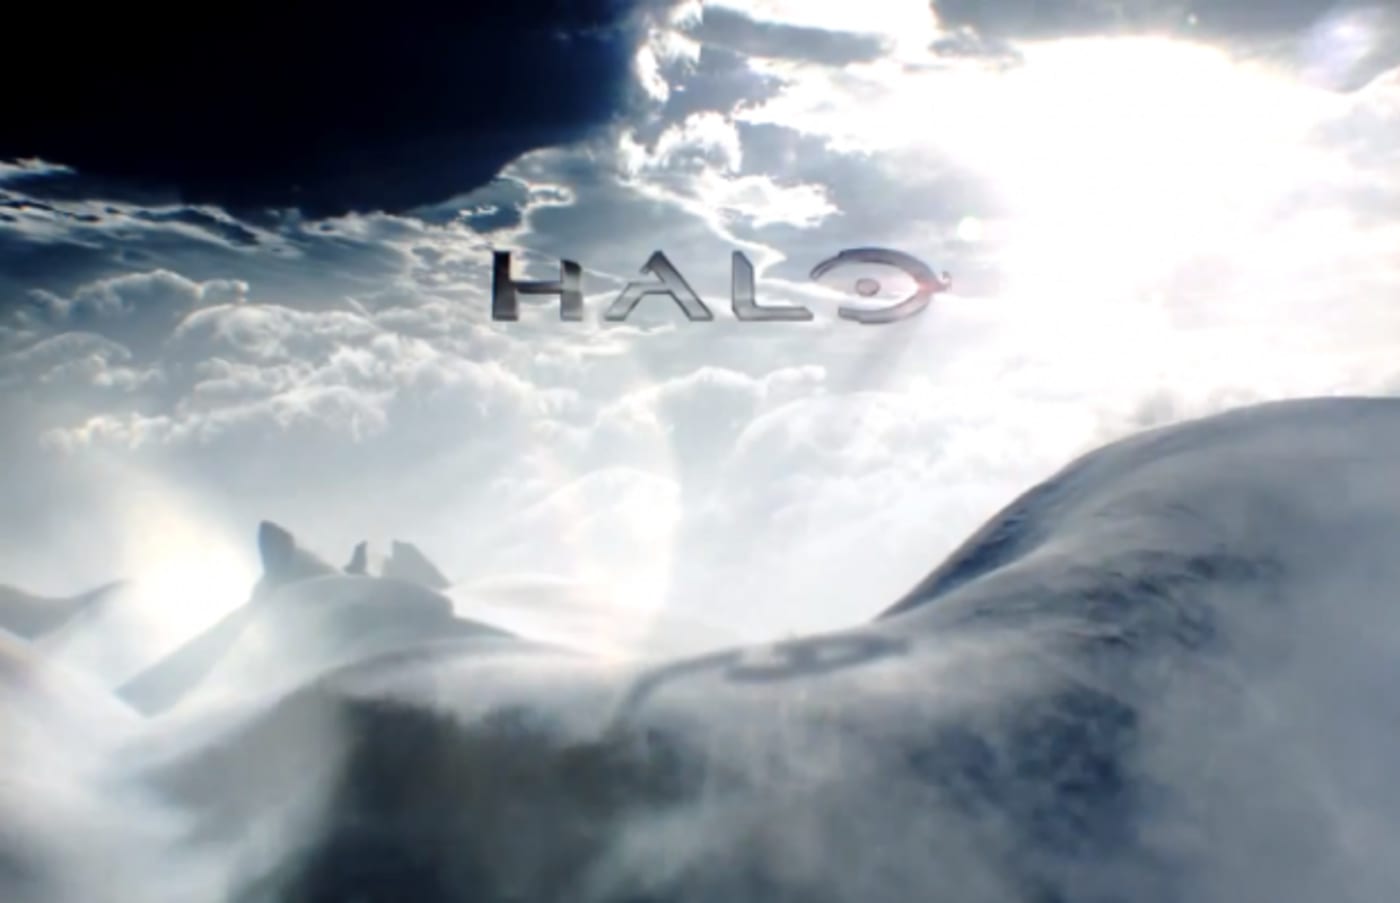 Microsoft Halo 4 for Next Gen